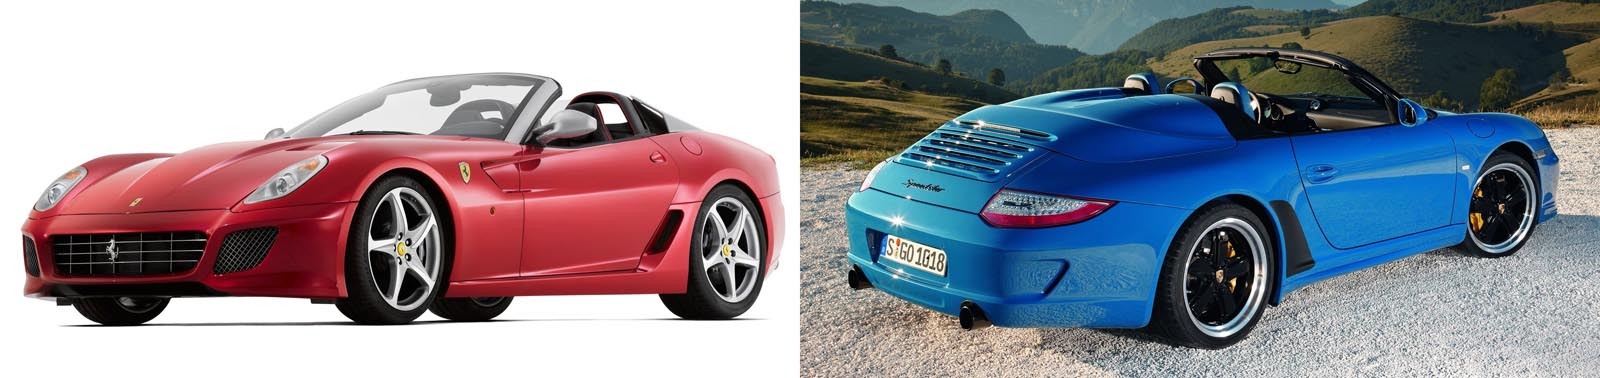 Ferrari 599 SA Aperta vs. Porsche 911 Speedster